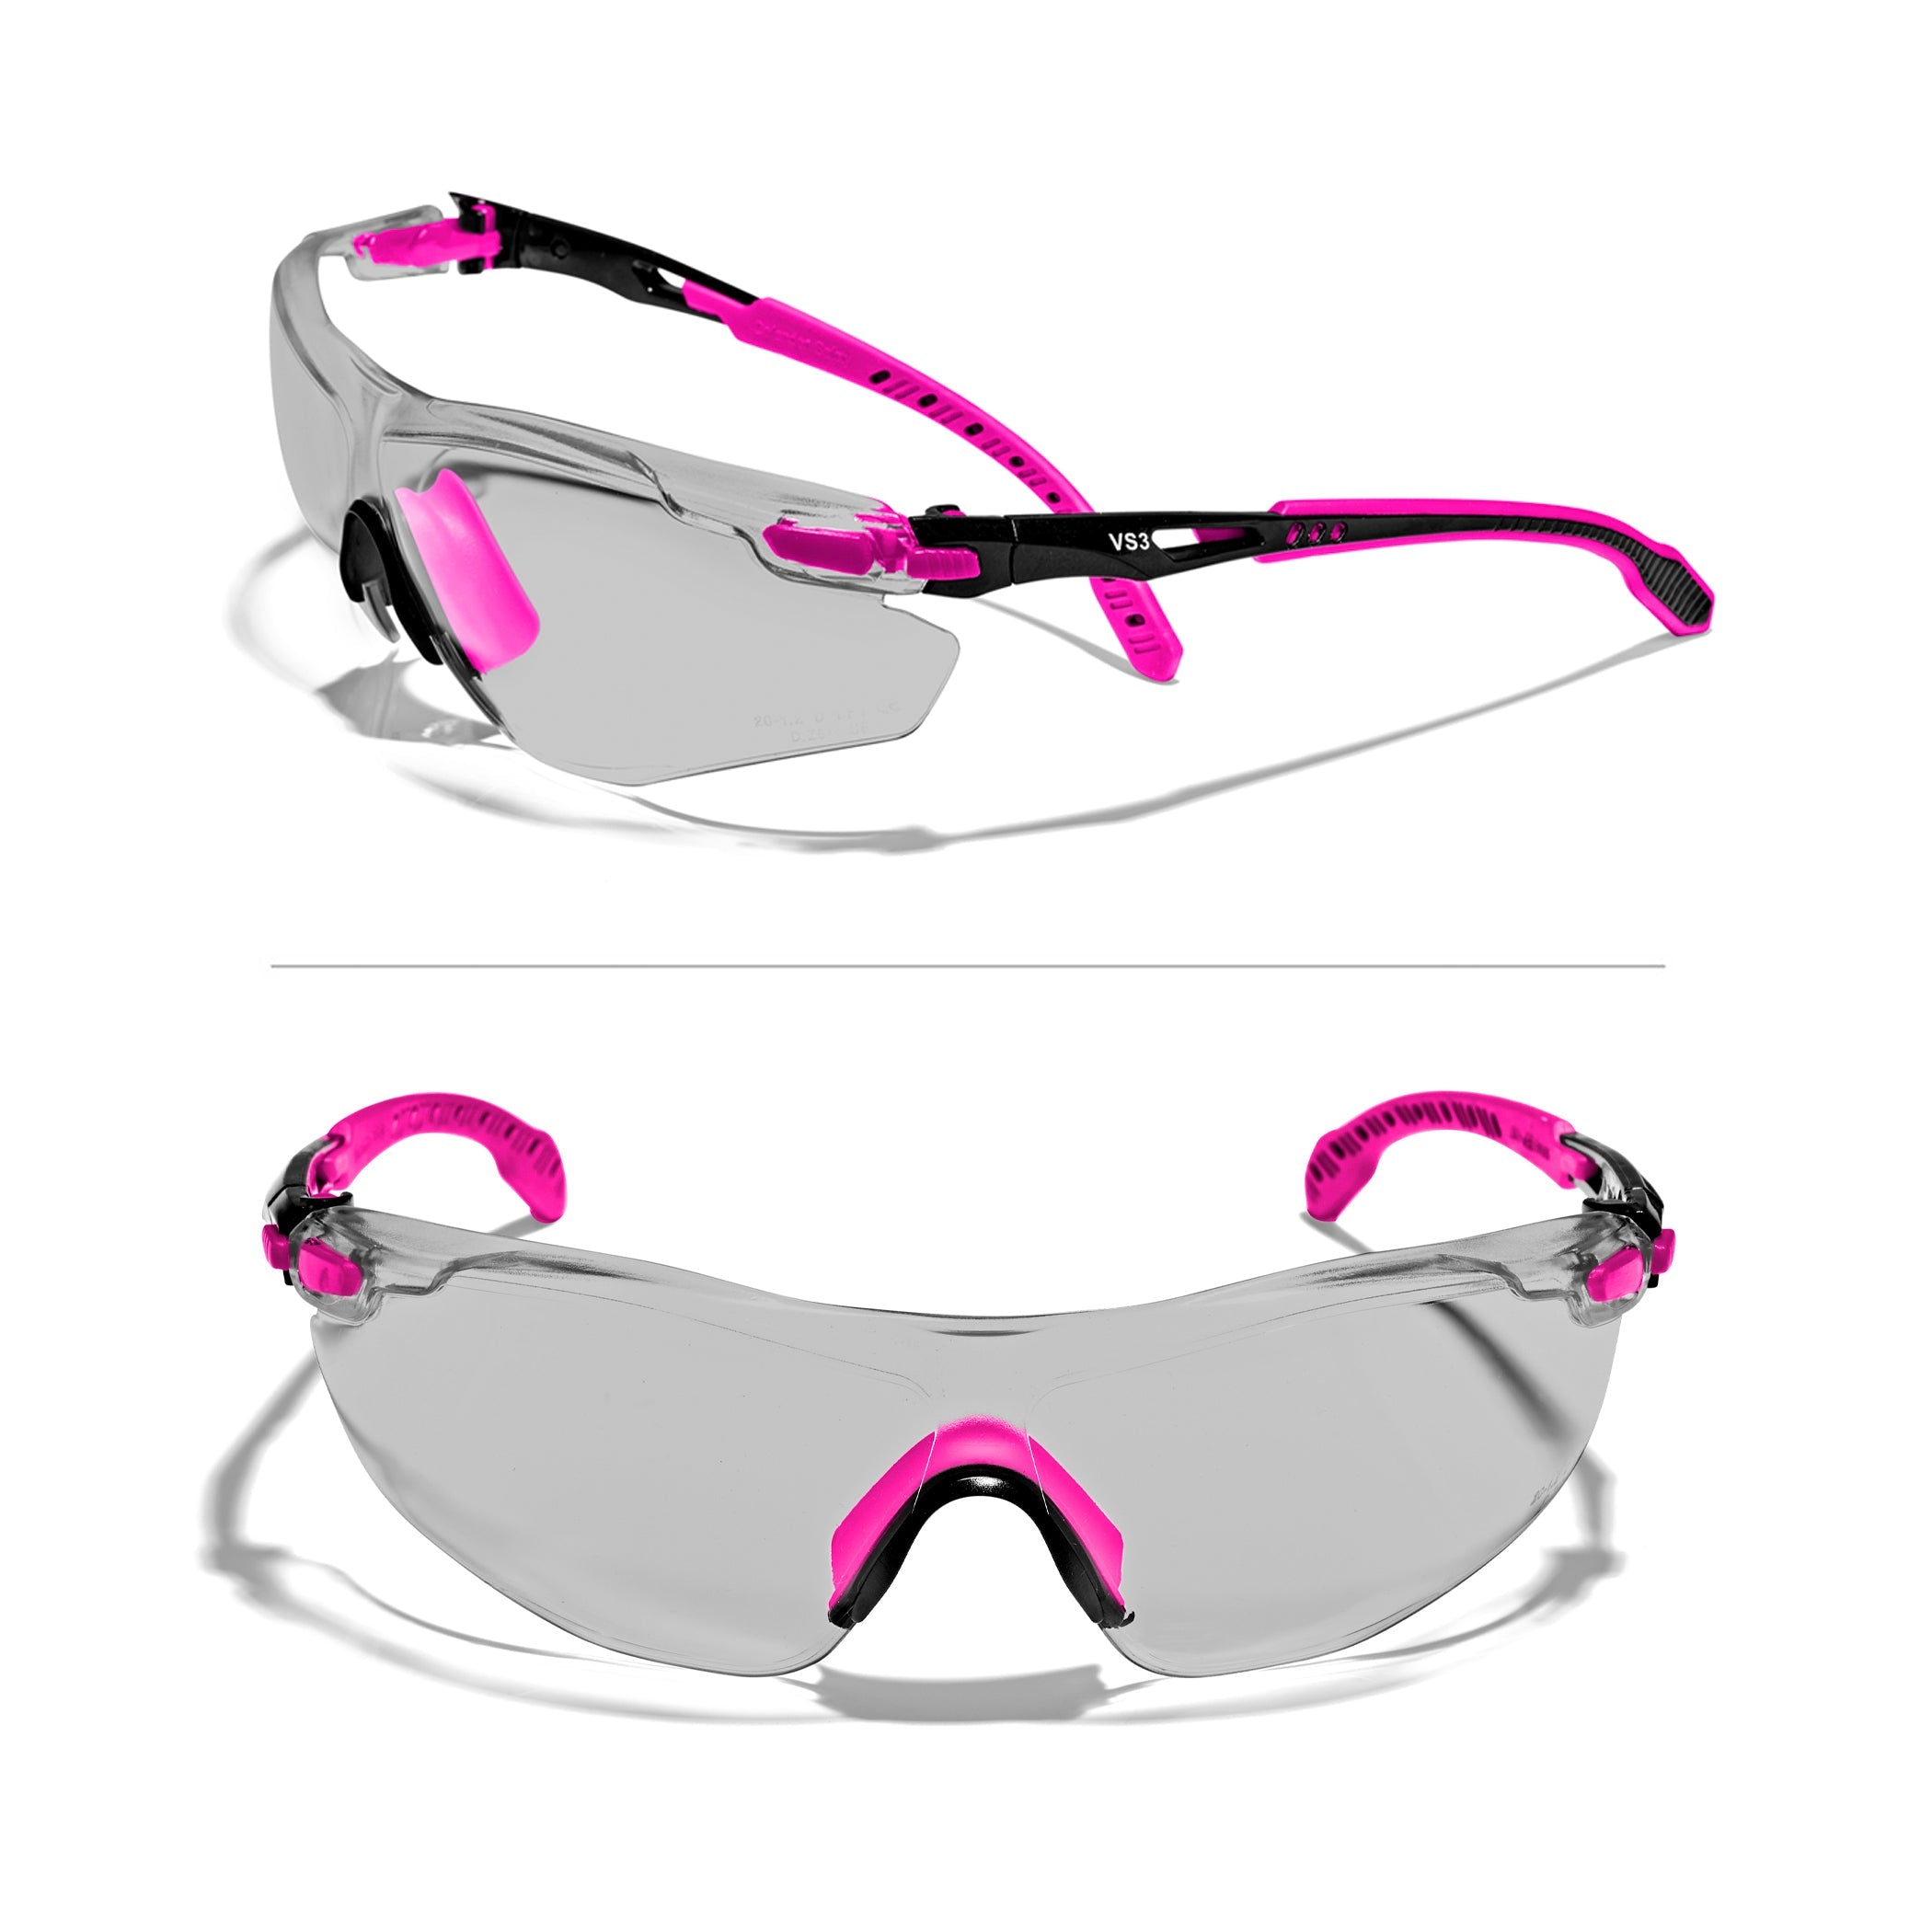 OPTIFENSE™ VS3 Anti Fog, Premium SMOKED Safety Glasses, ANSI Z87+